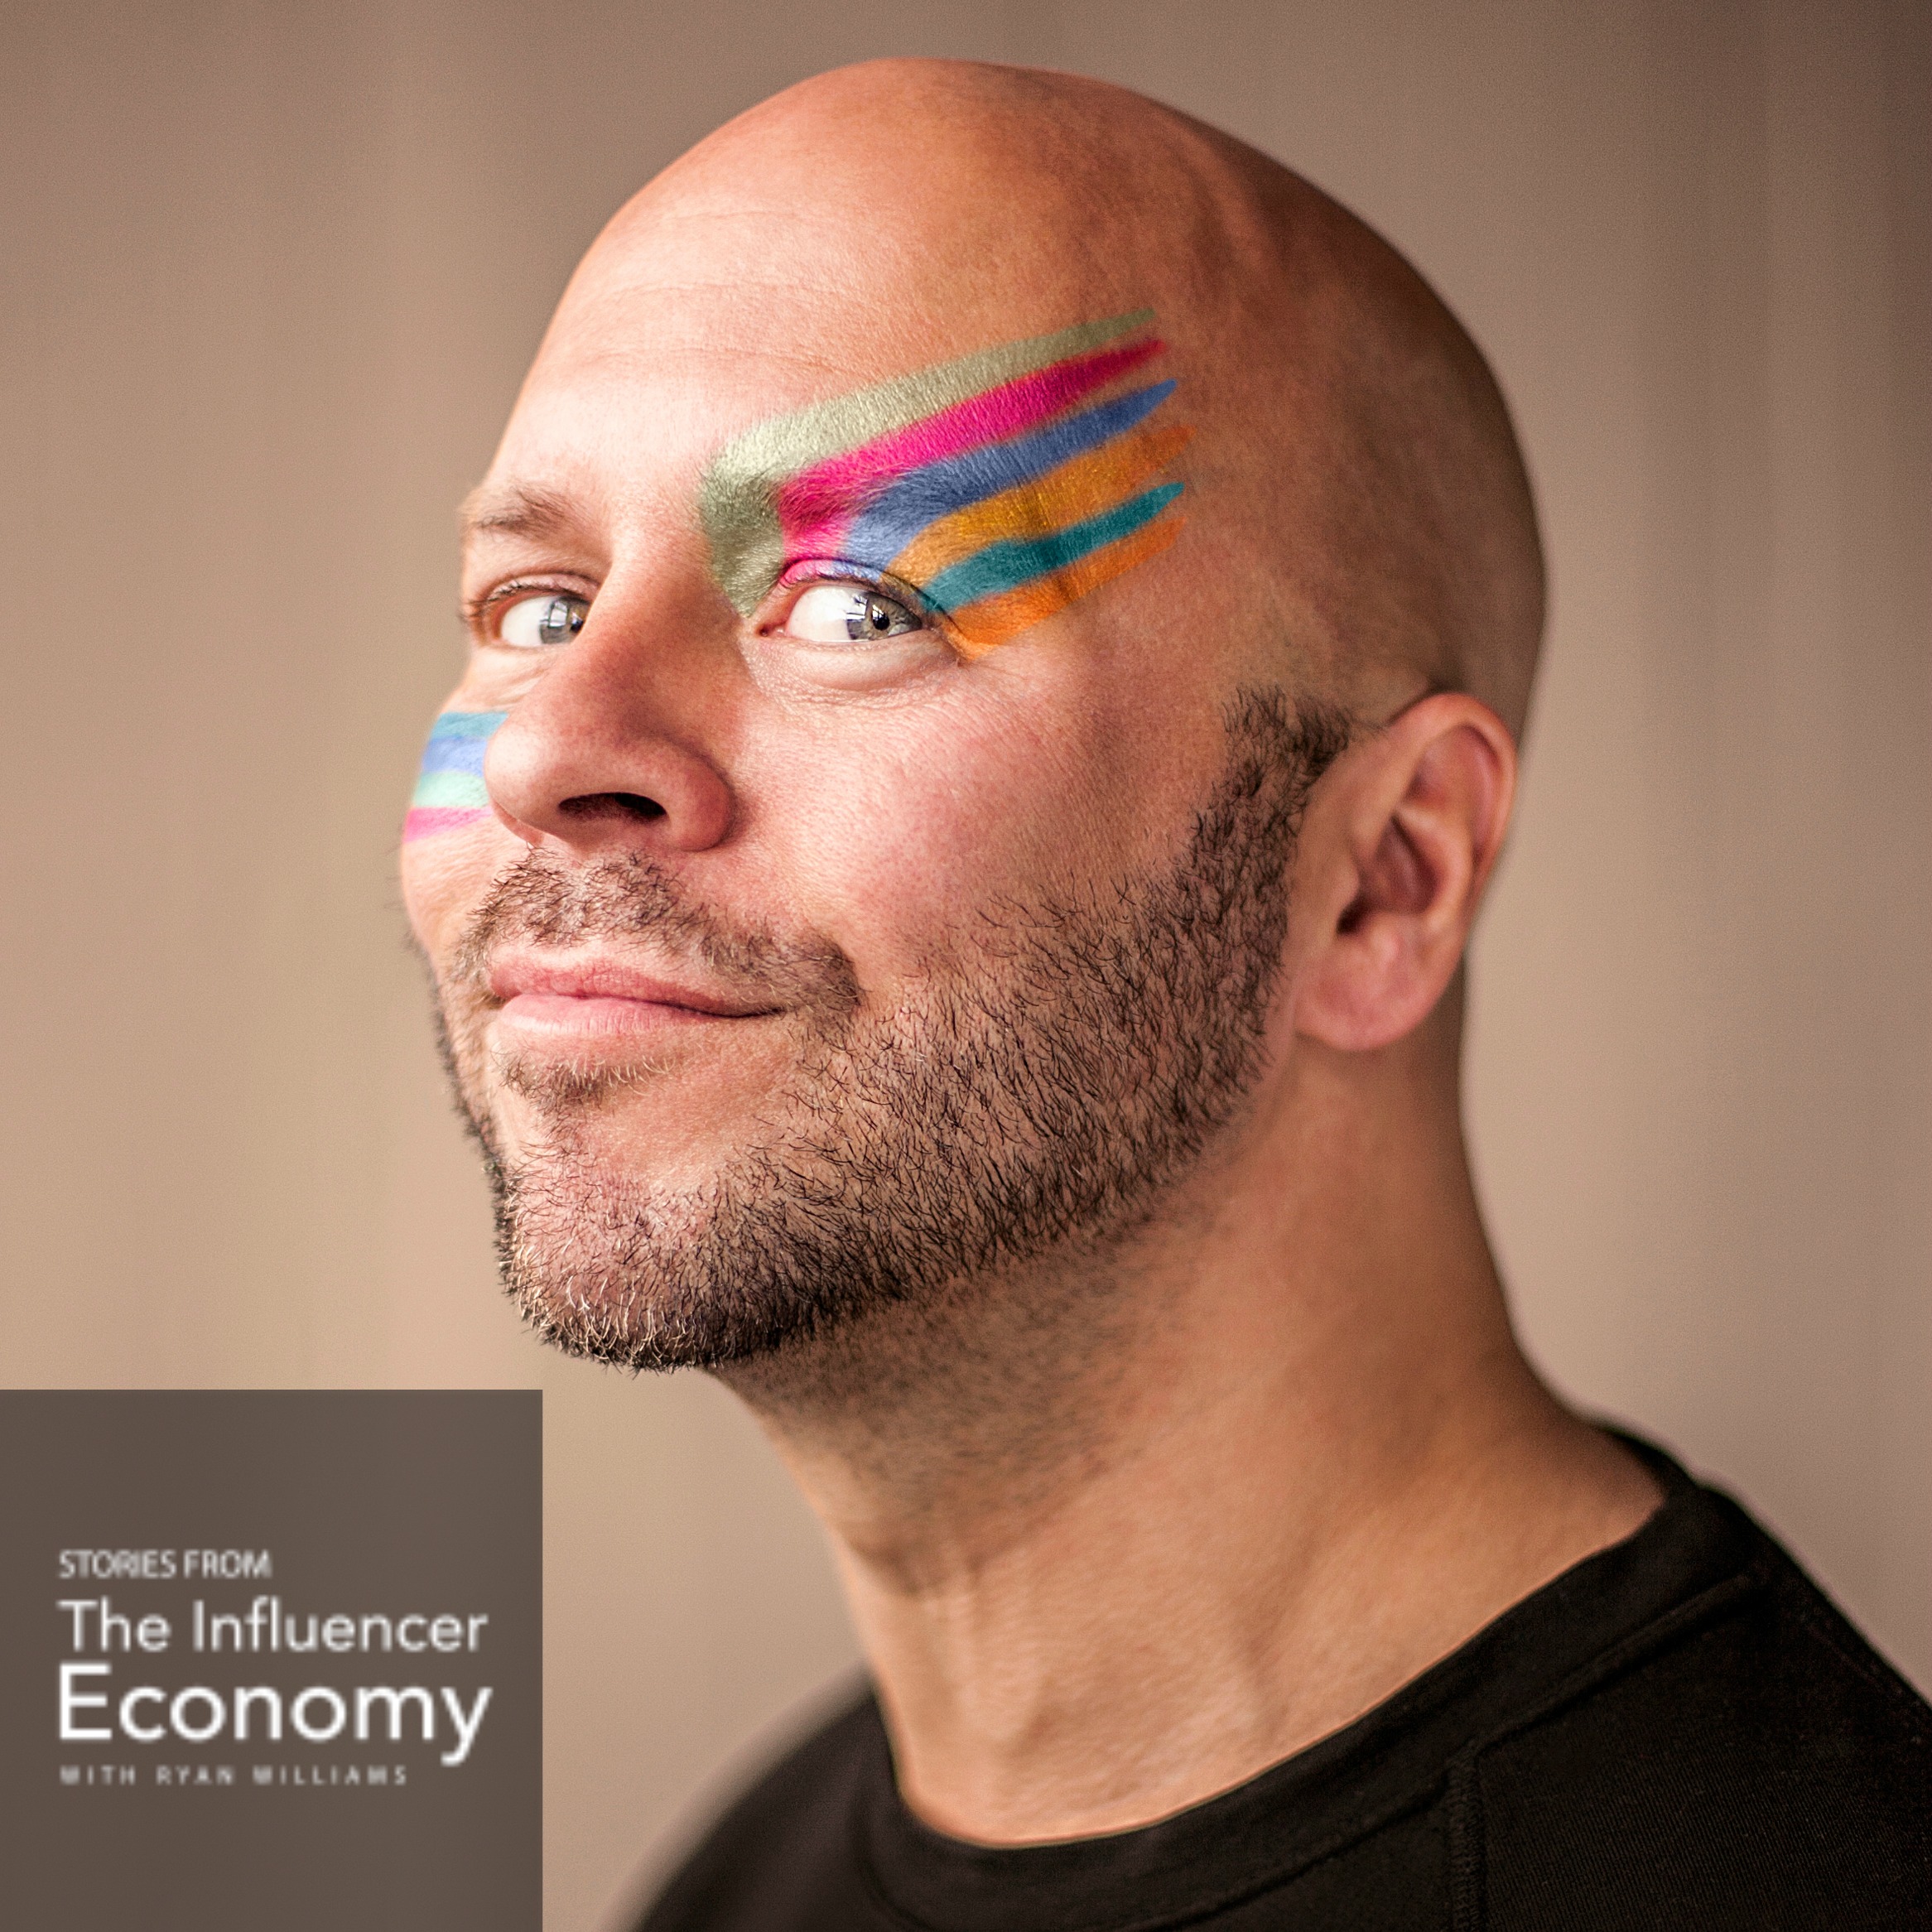 Derek Sivers Influencer Economy with Ryan Williams